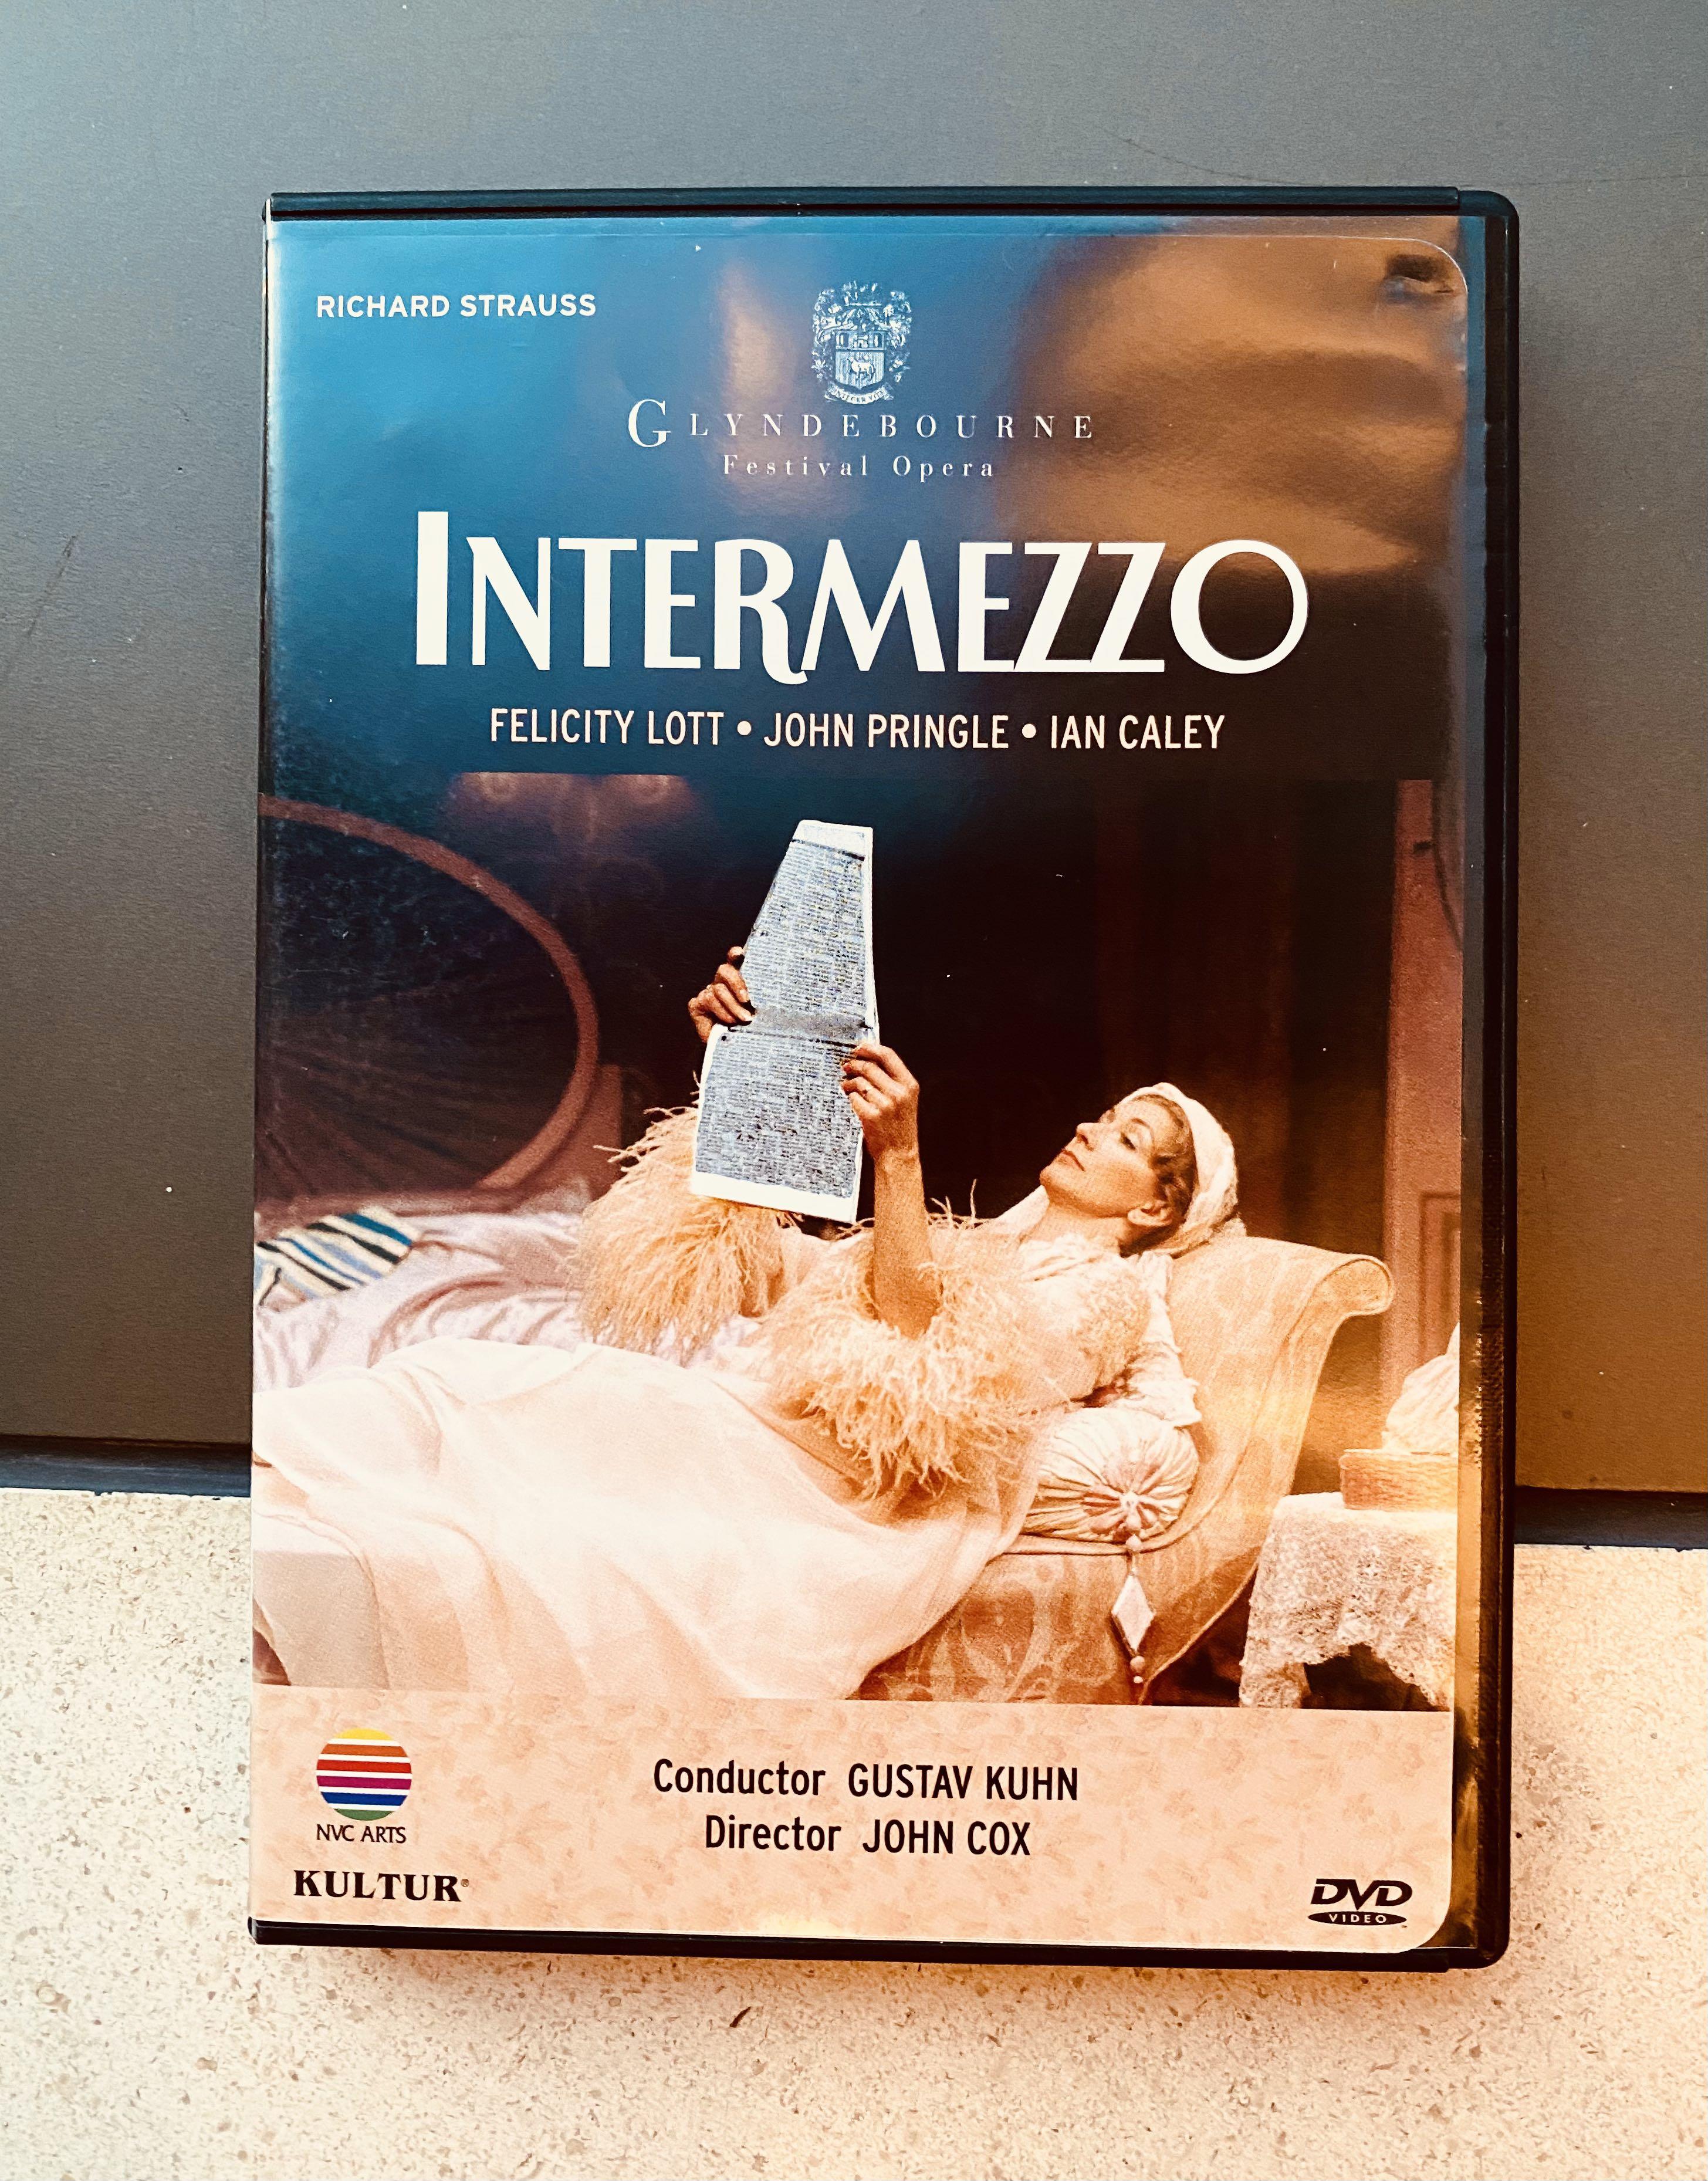 Richard Strauss: Intermezzo 古典音樂歌劇DVD